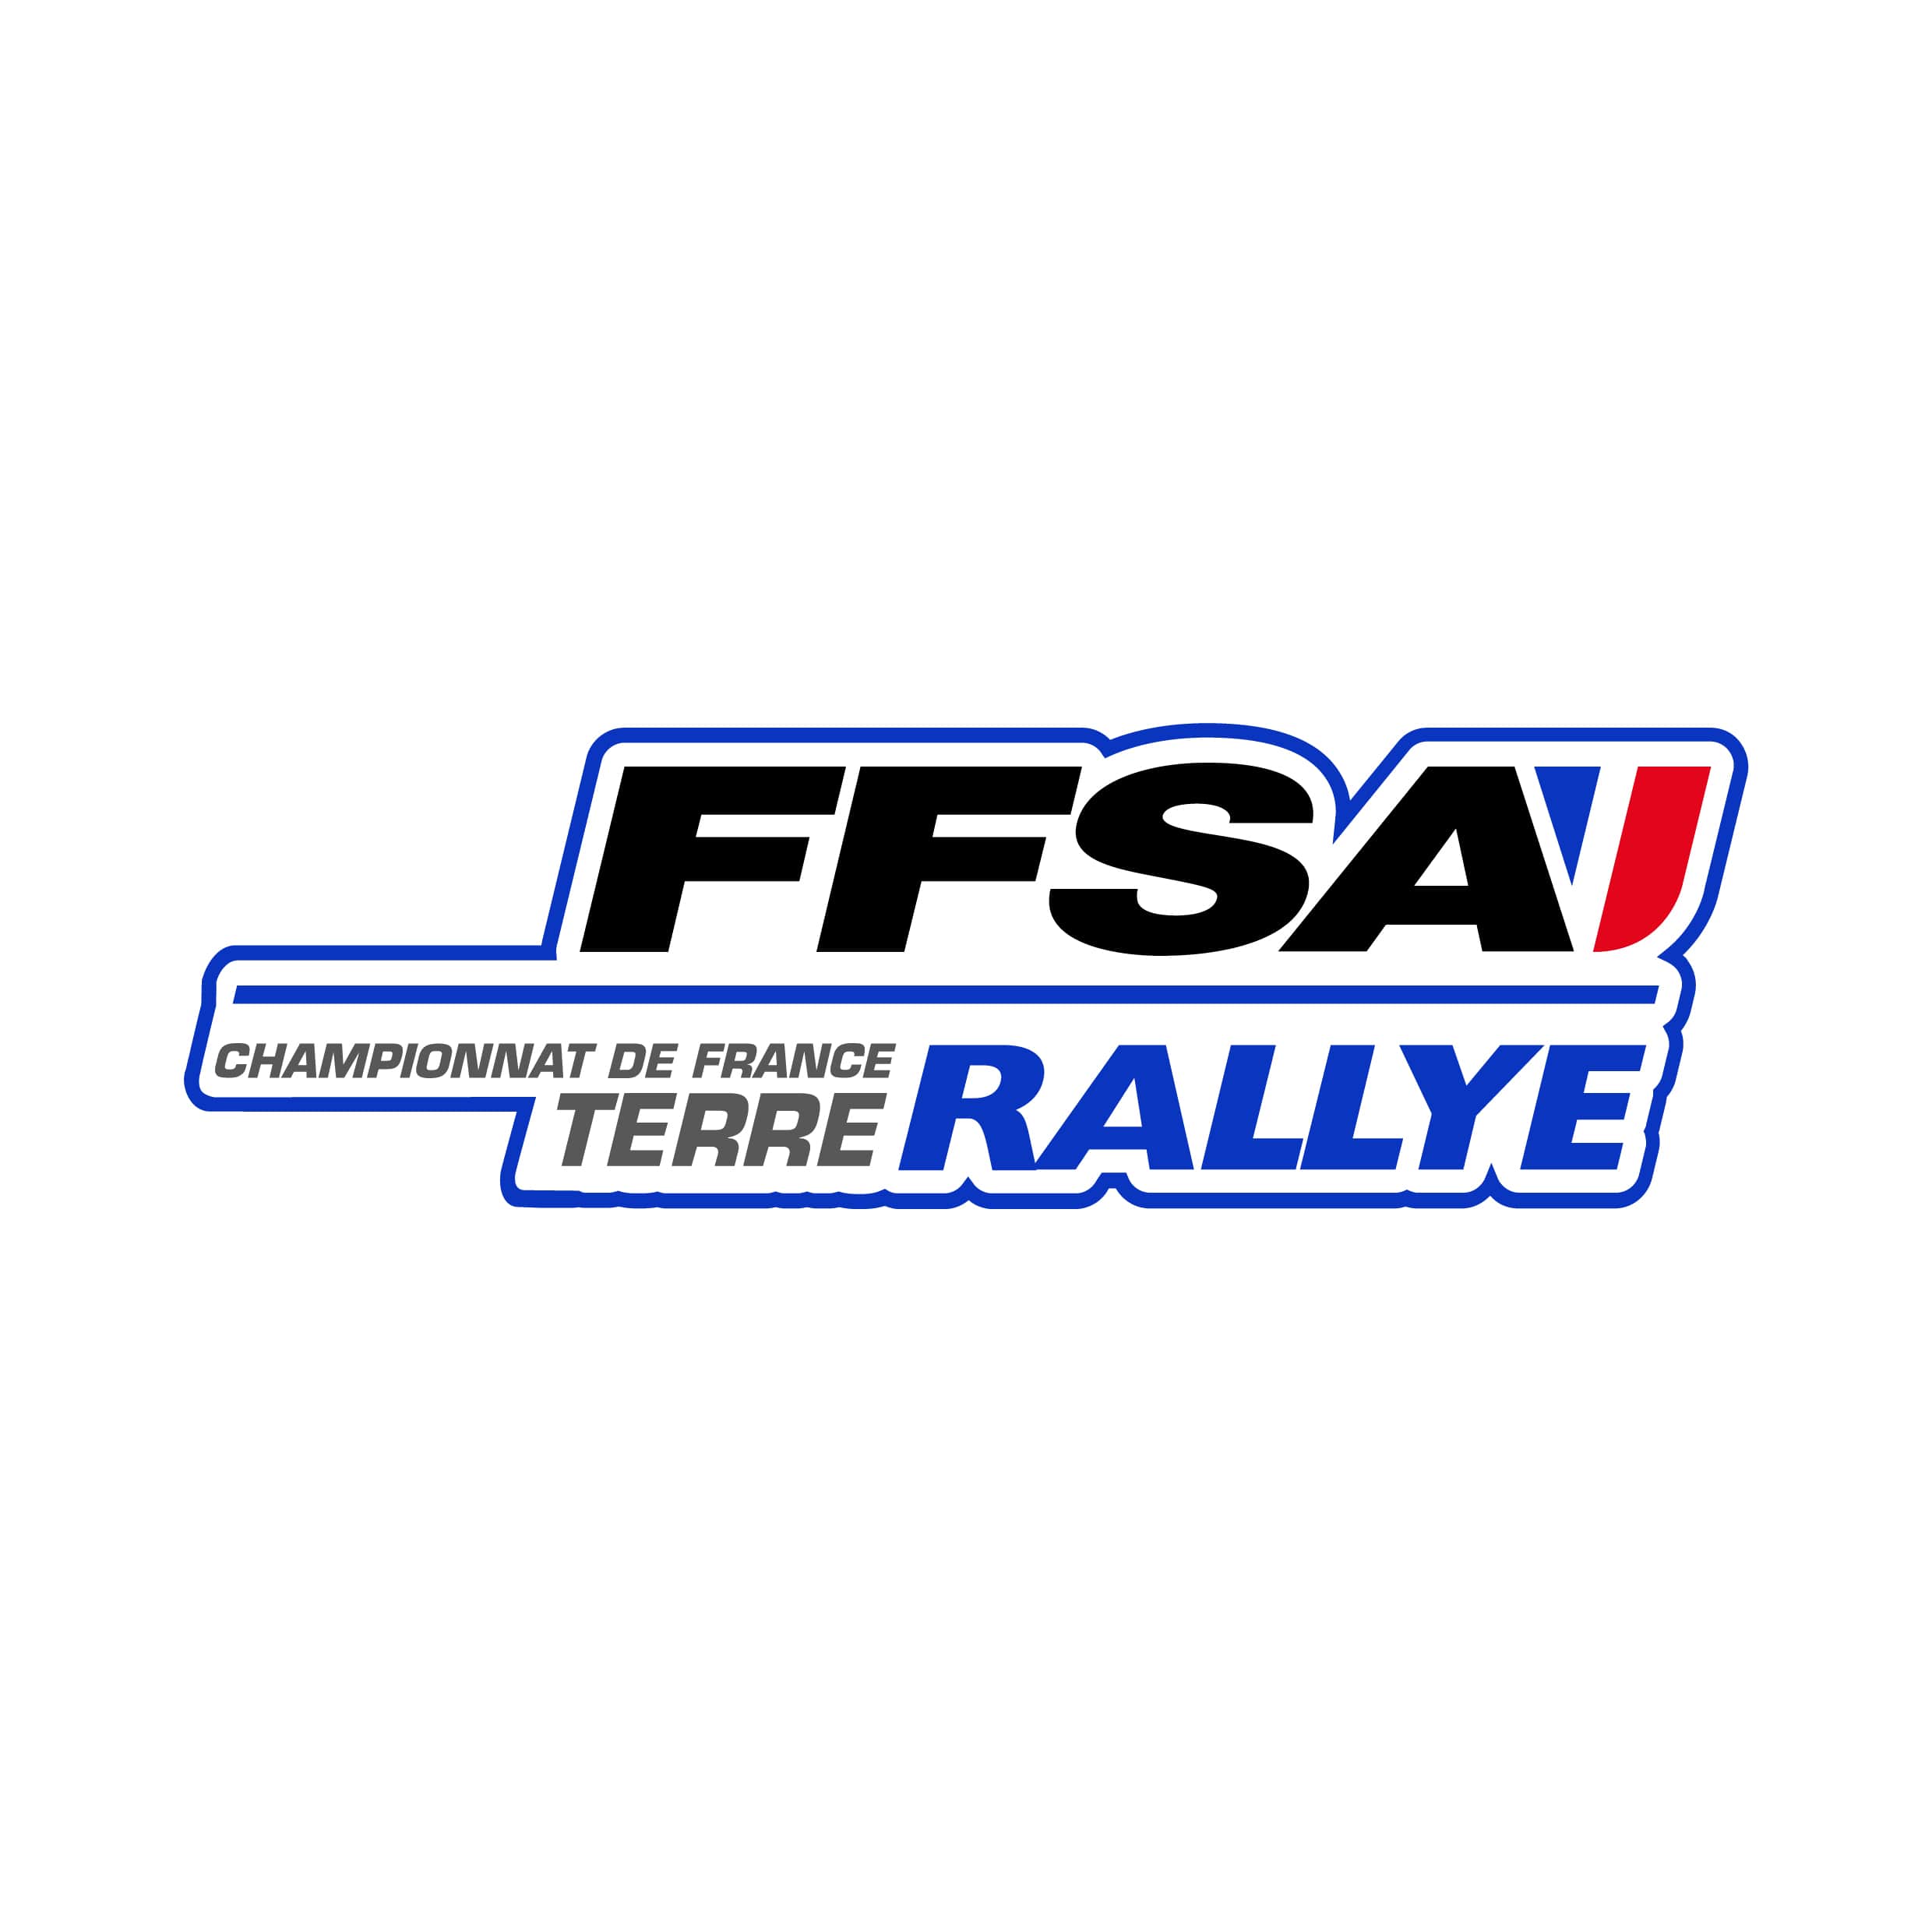 stickers-ffsa-championnat-france-terre-ref7-sport-automobile-rallye-autocollant-voiture-sticker-auto-autocollants-decals-racing-min